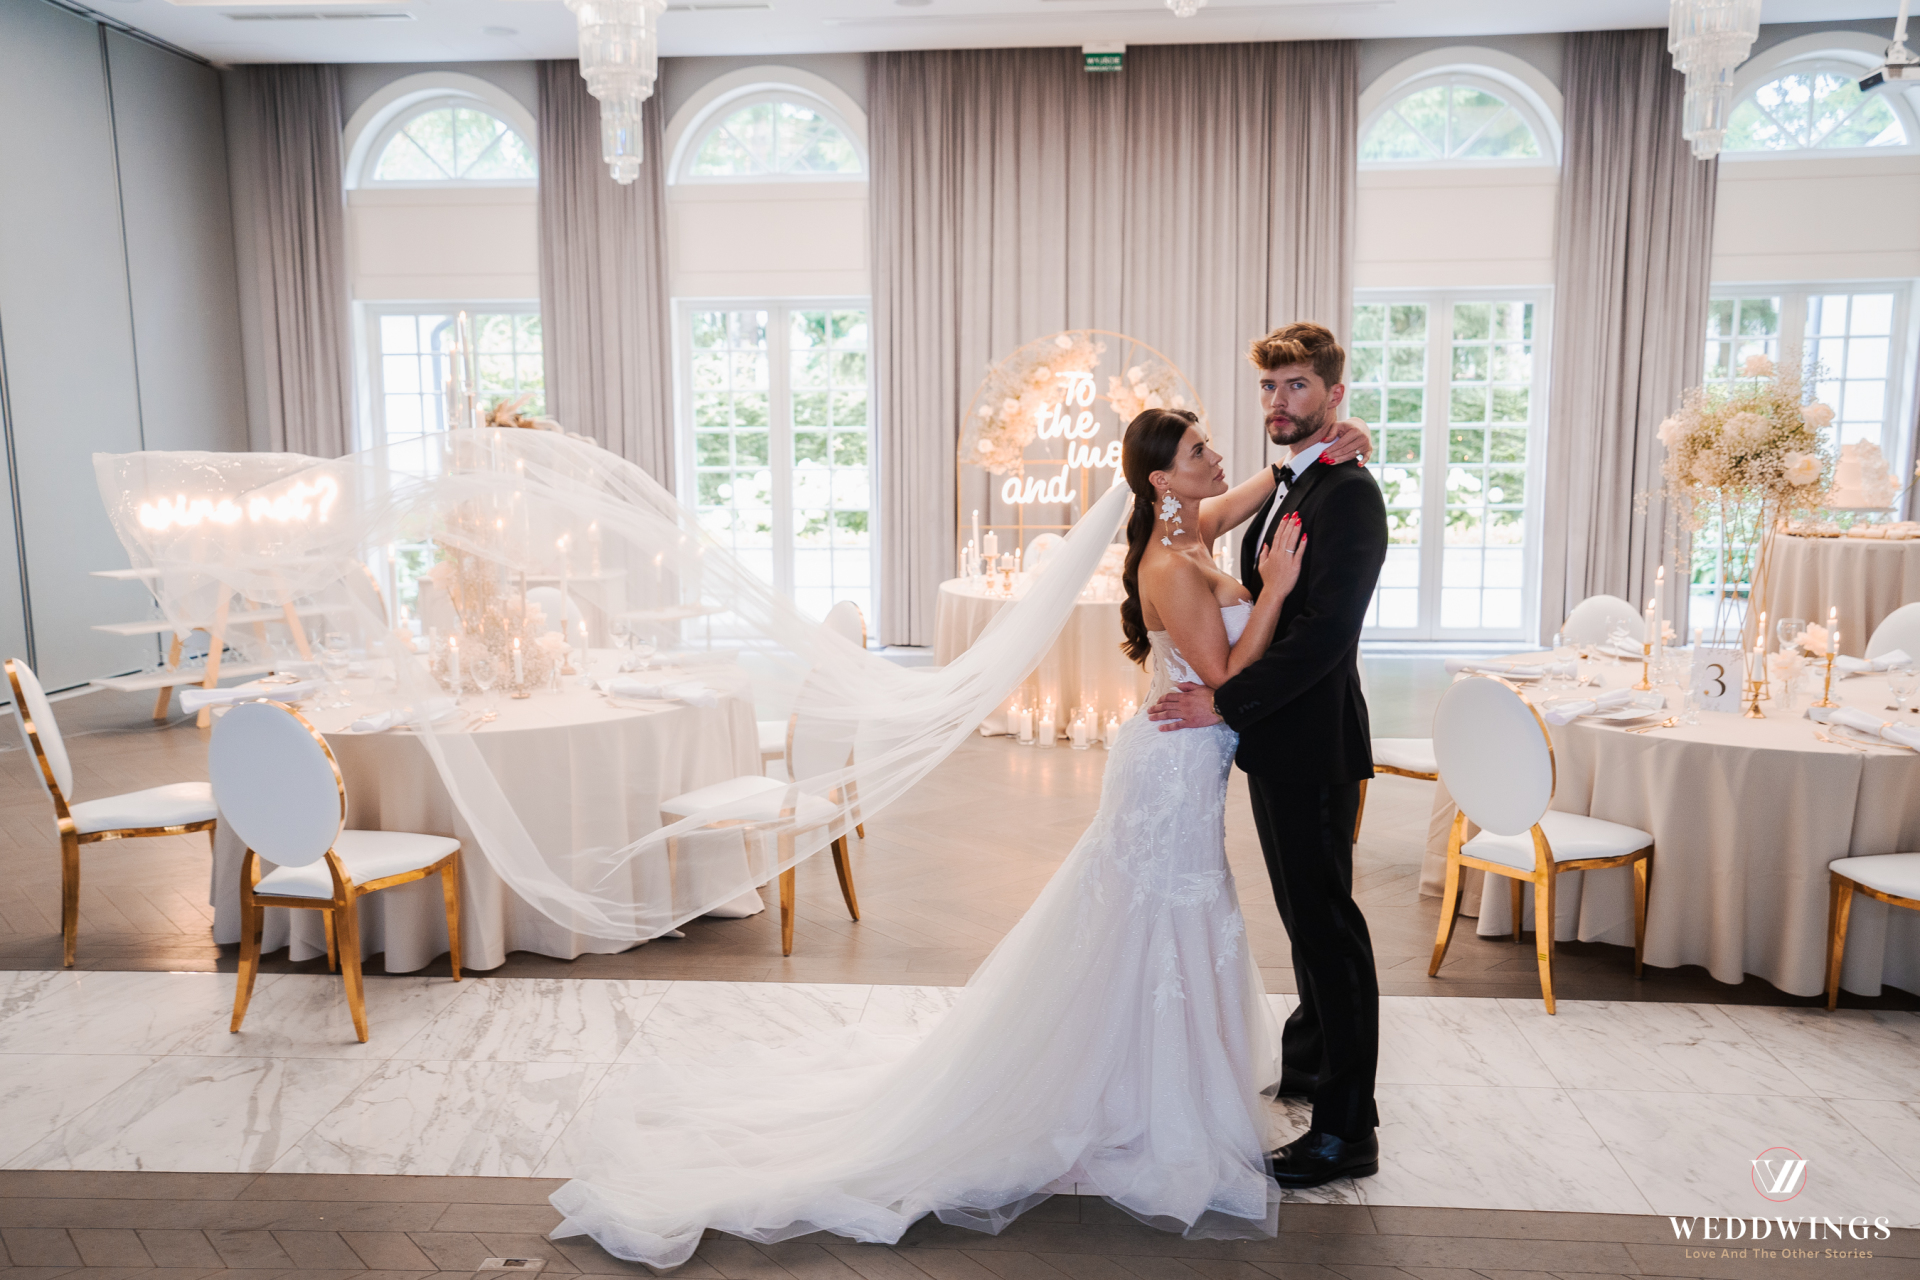 Let's Get Married Wedding Planner | Wedding planner Warszawa, mazowieckie - cover